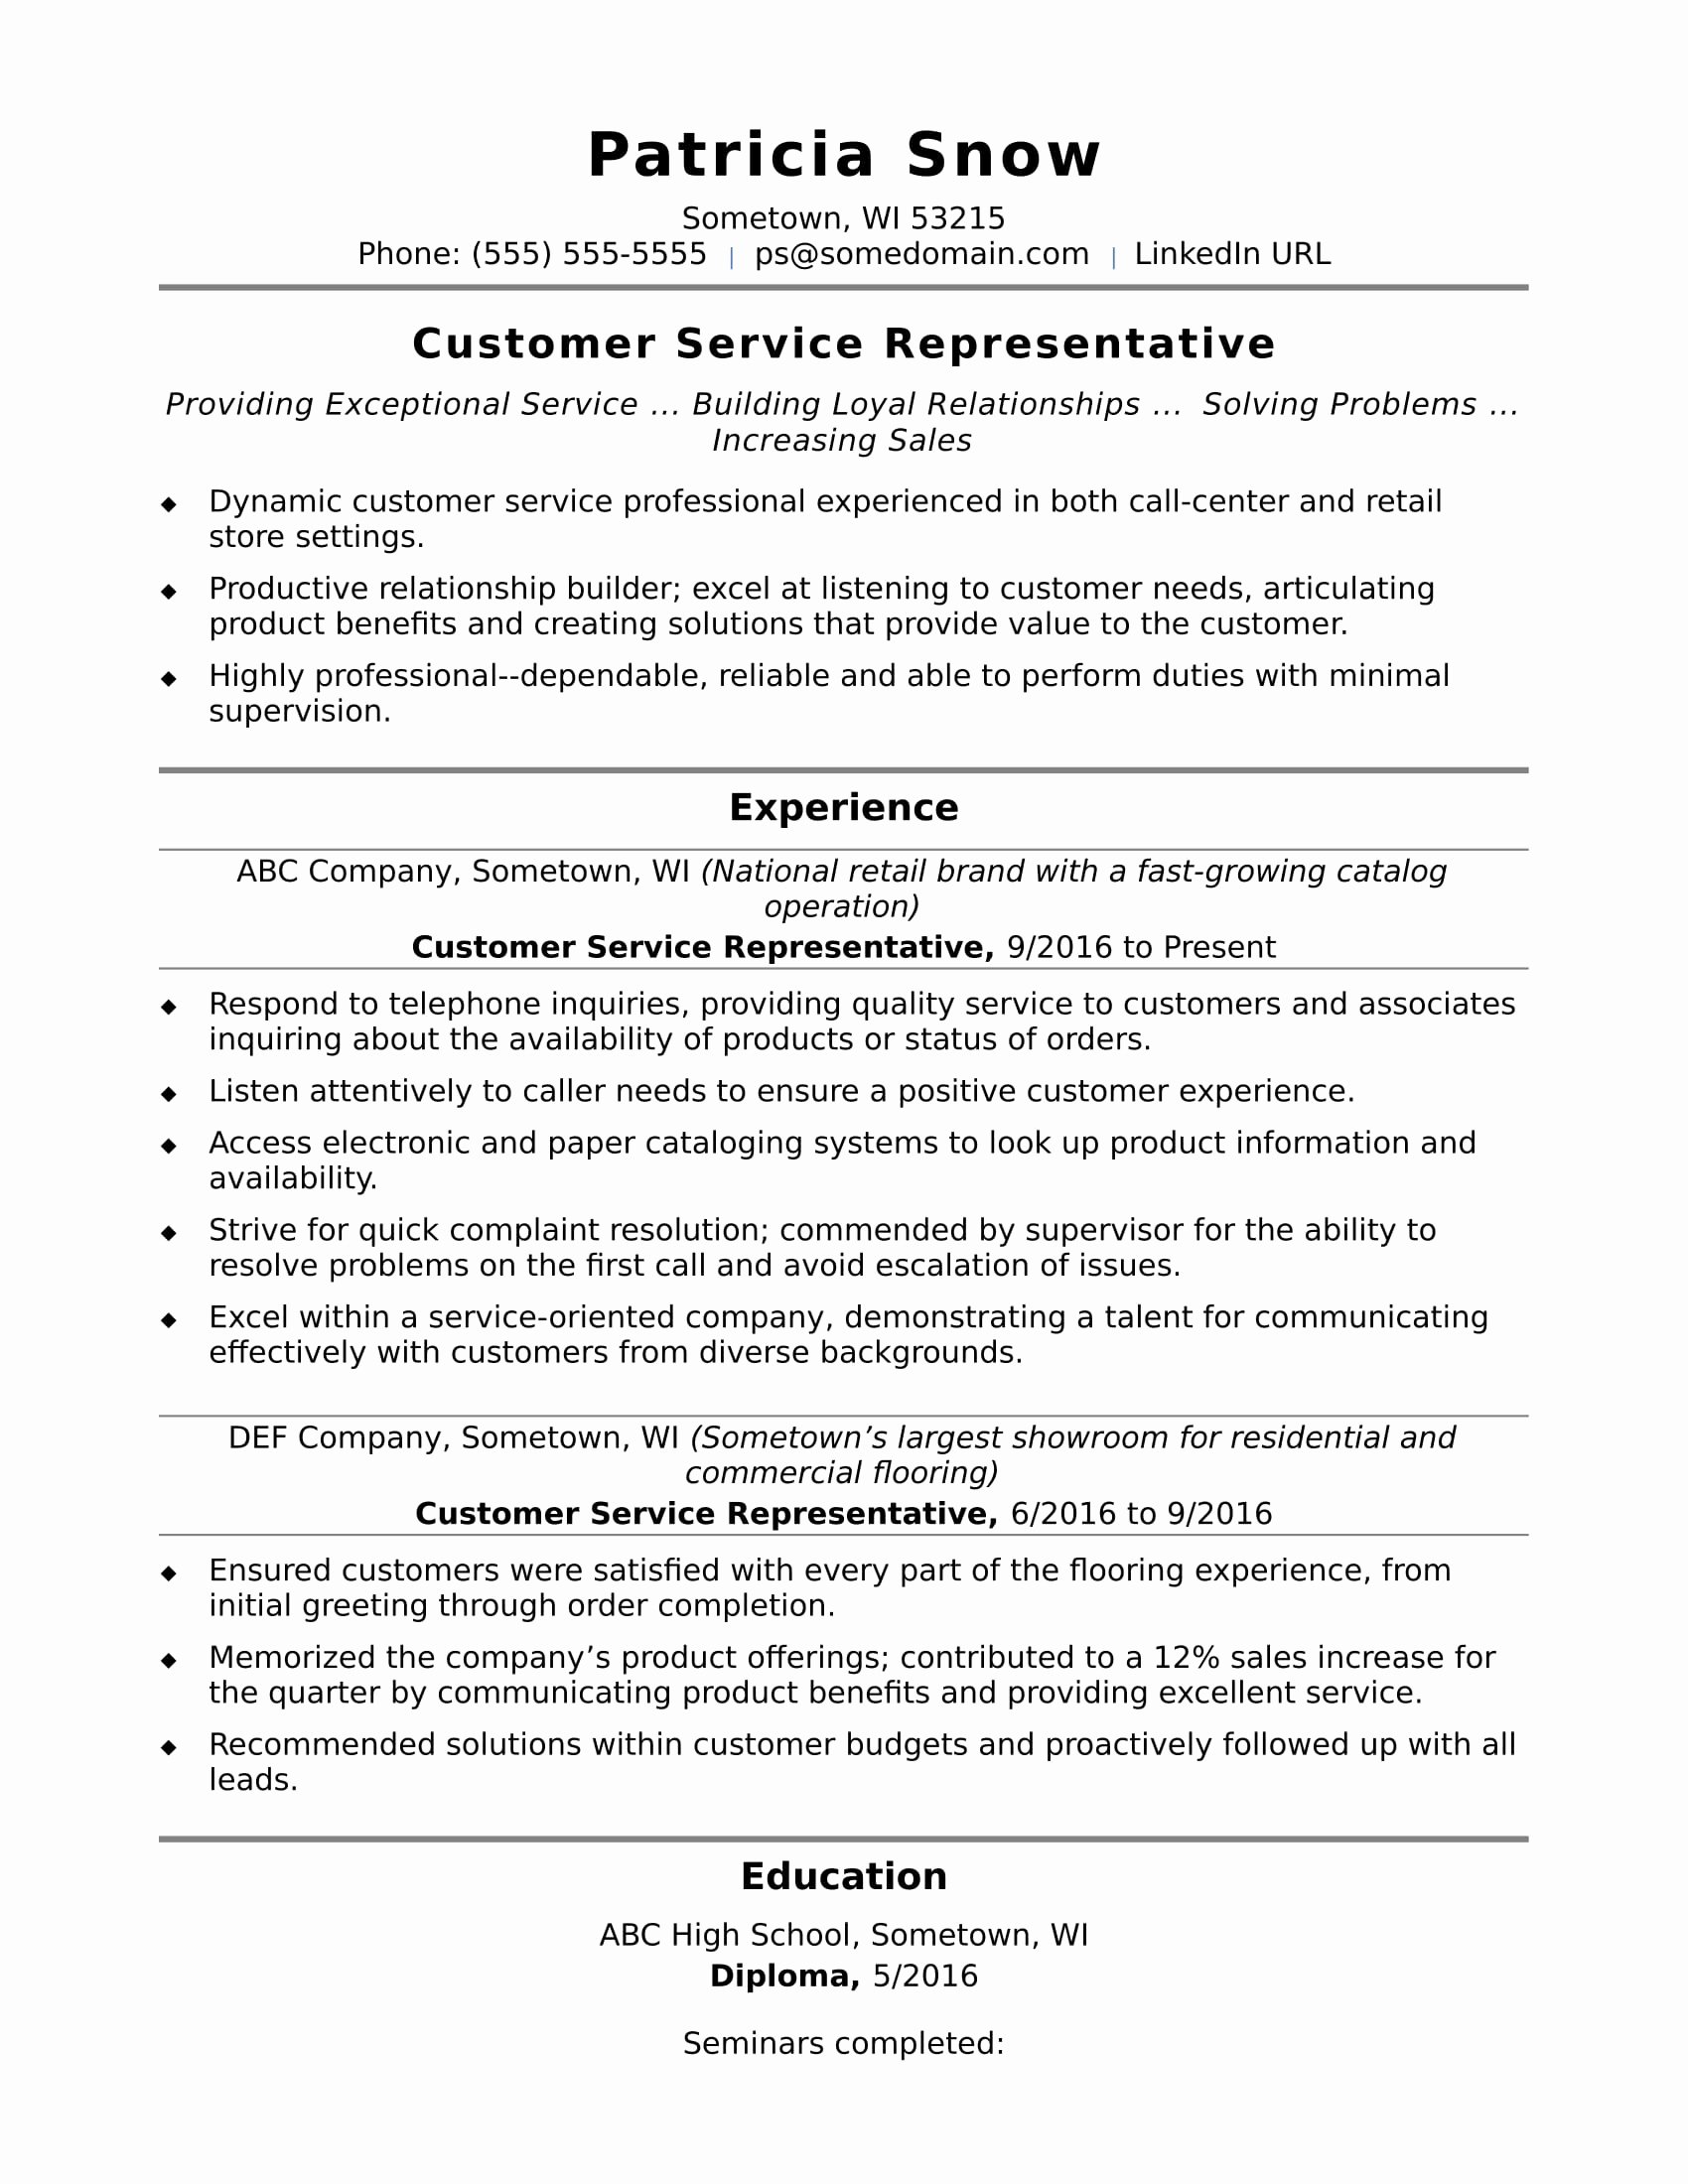 Customer Service Representative Resume Sample